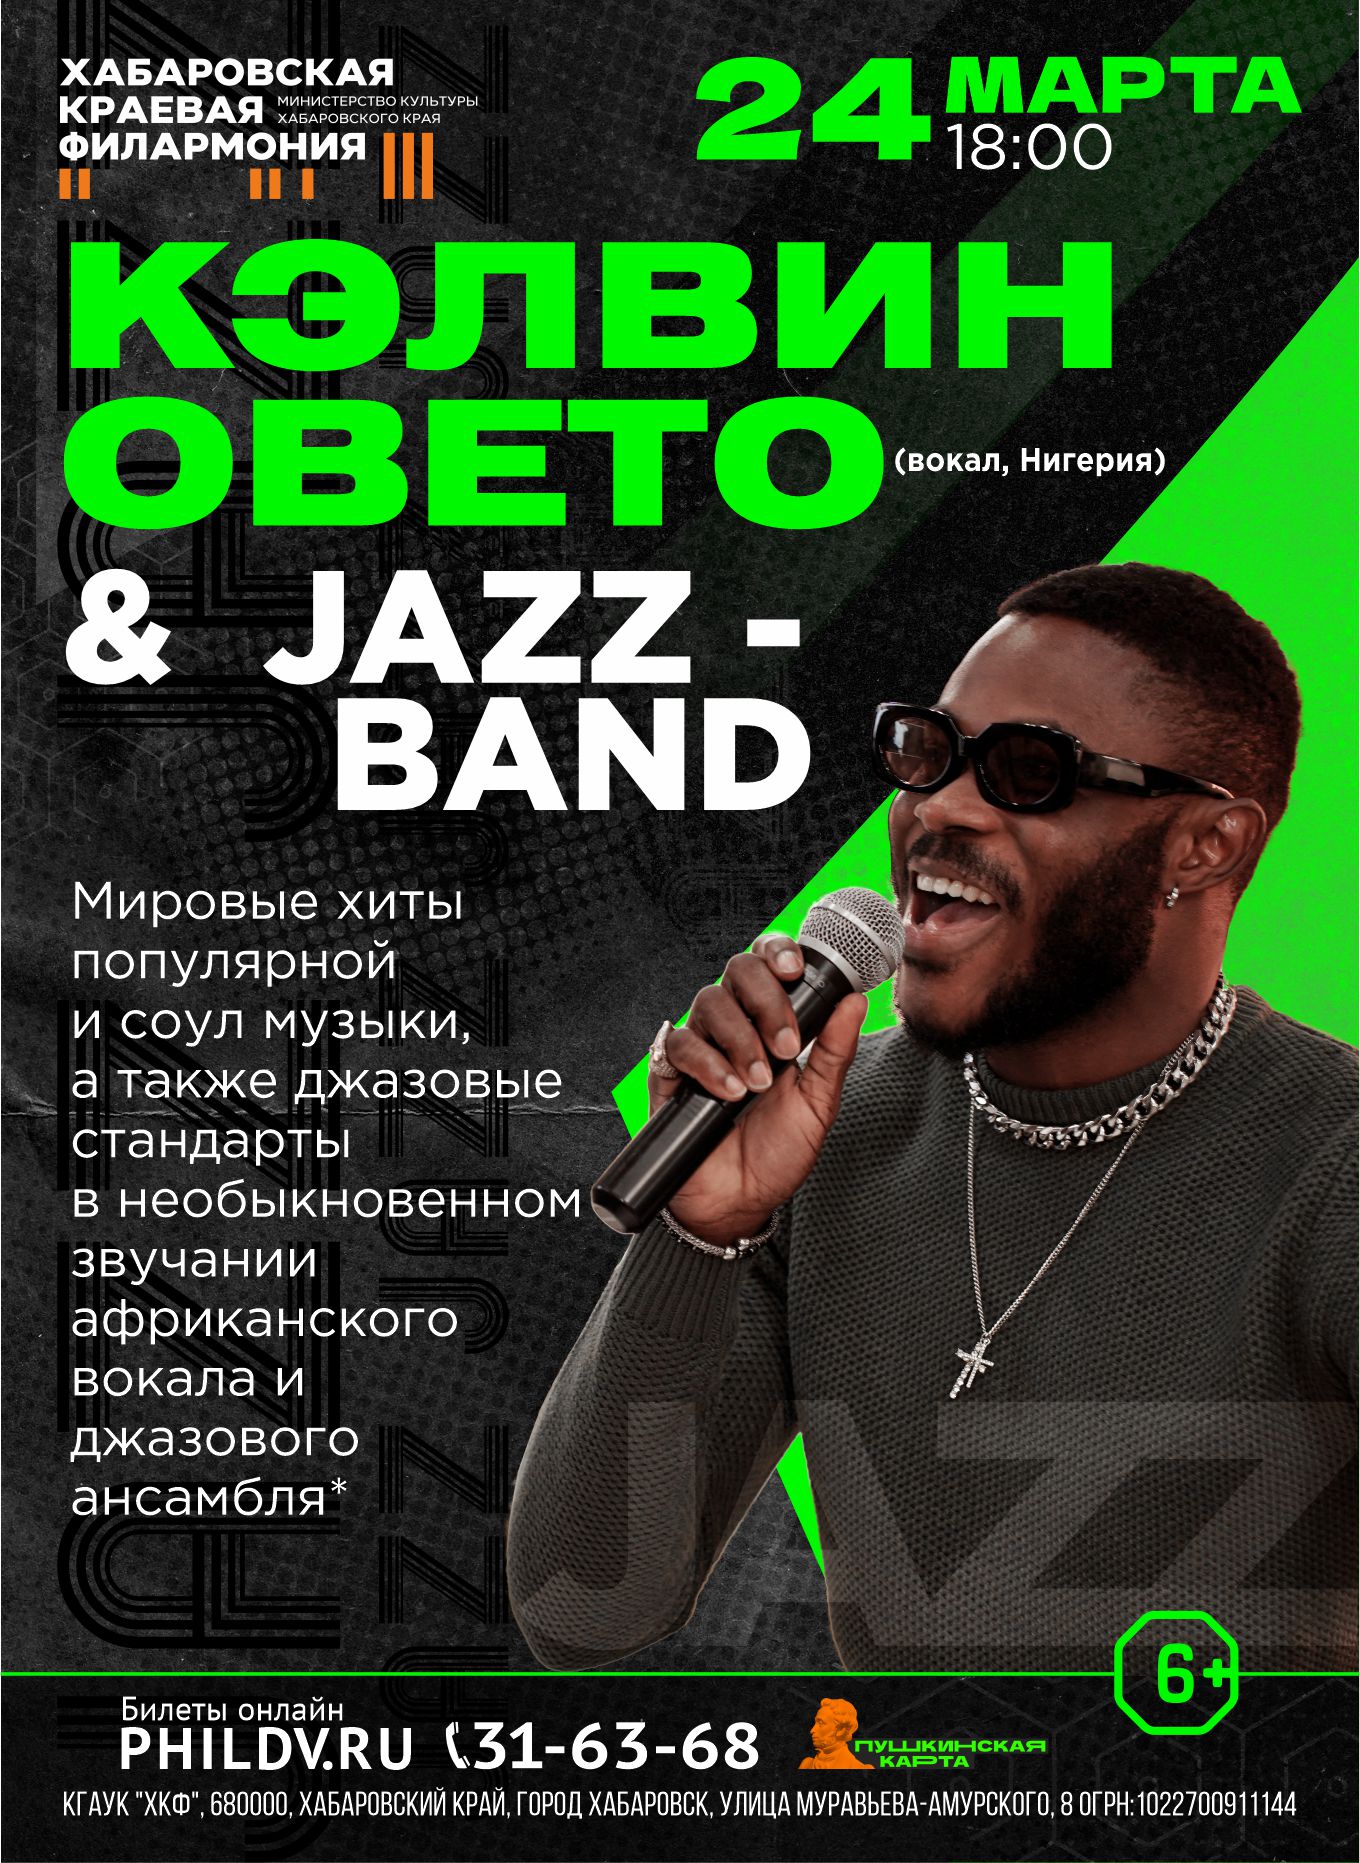 Кэлвин ОВЕТО & Jazz-band